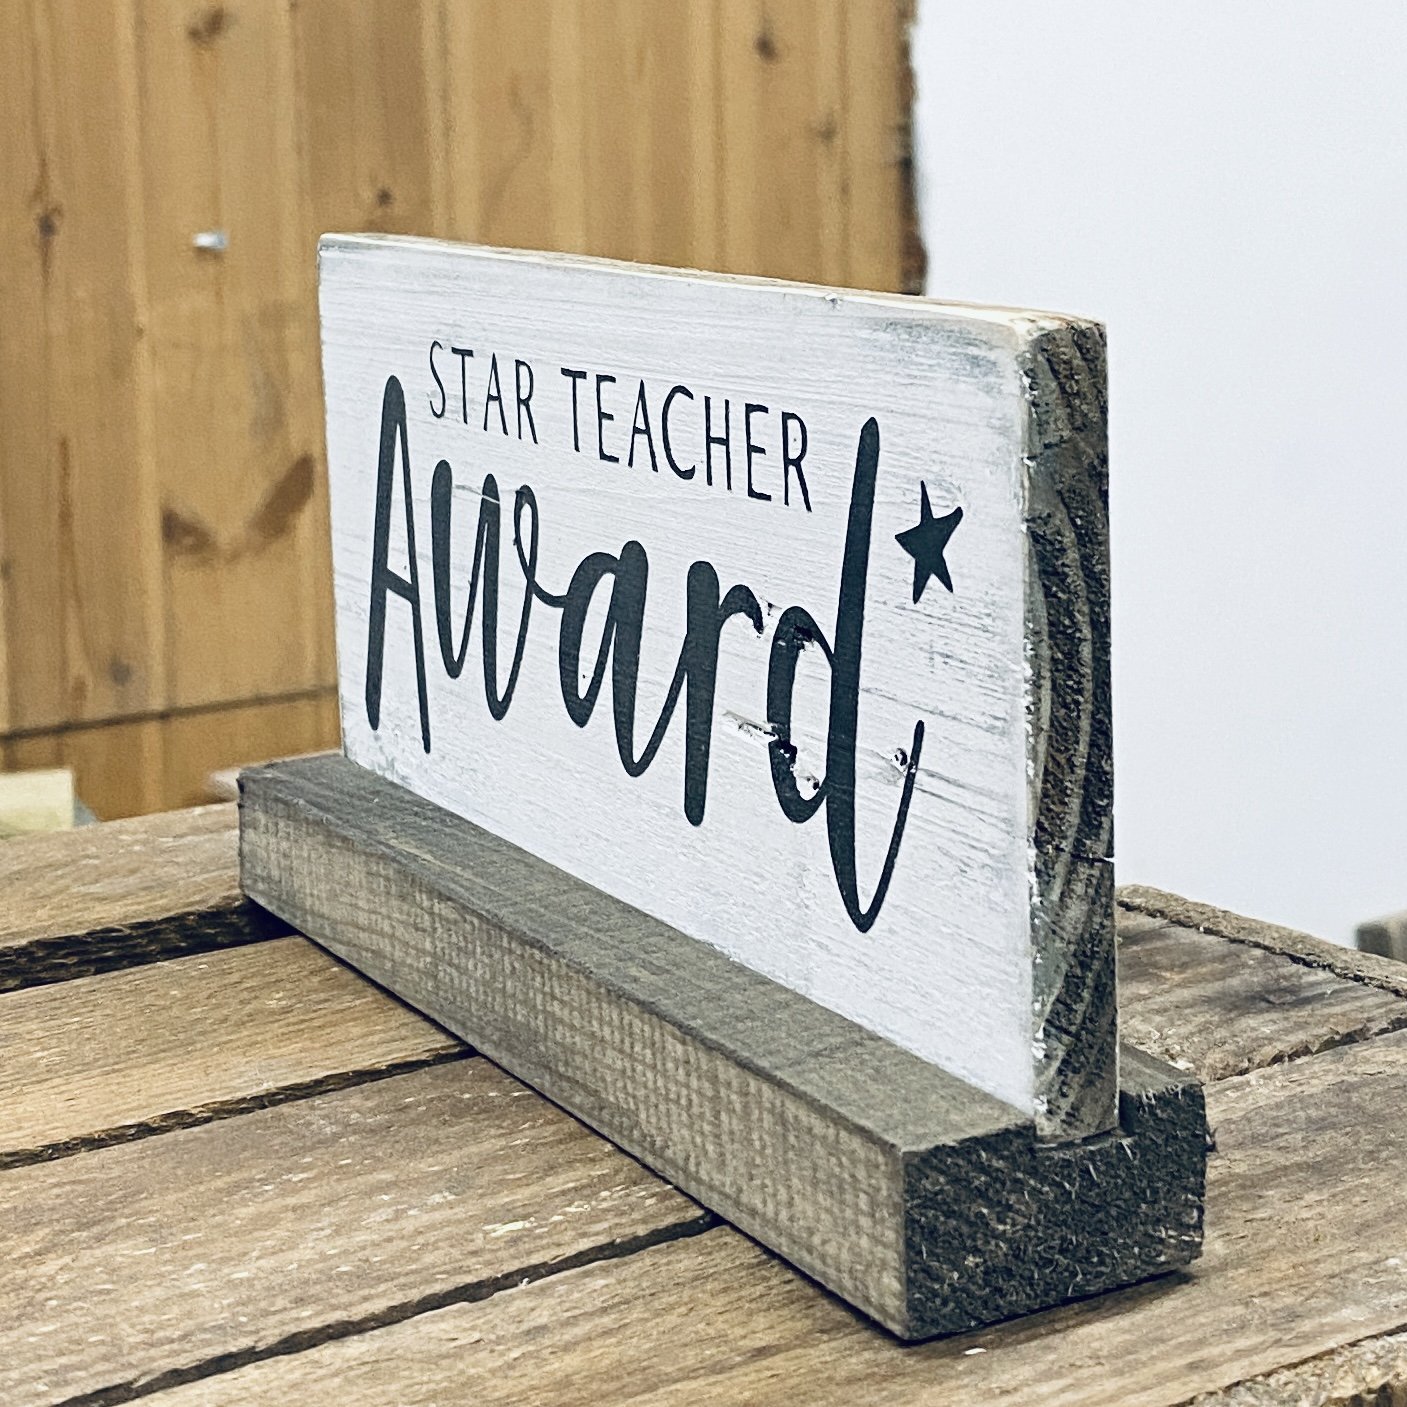 Star Teacher Award | Ready Made - The Imperfect Wood Company - Ready Made